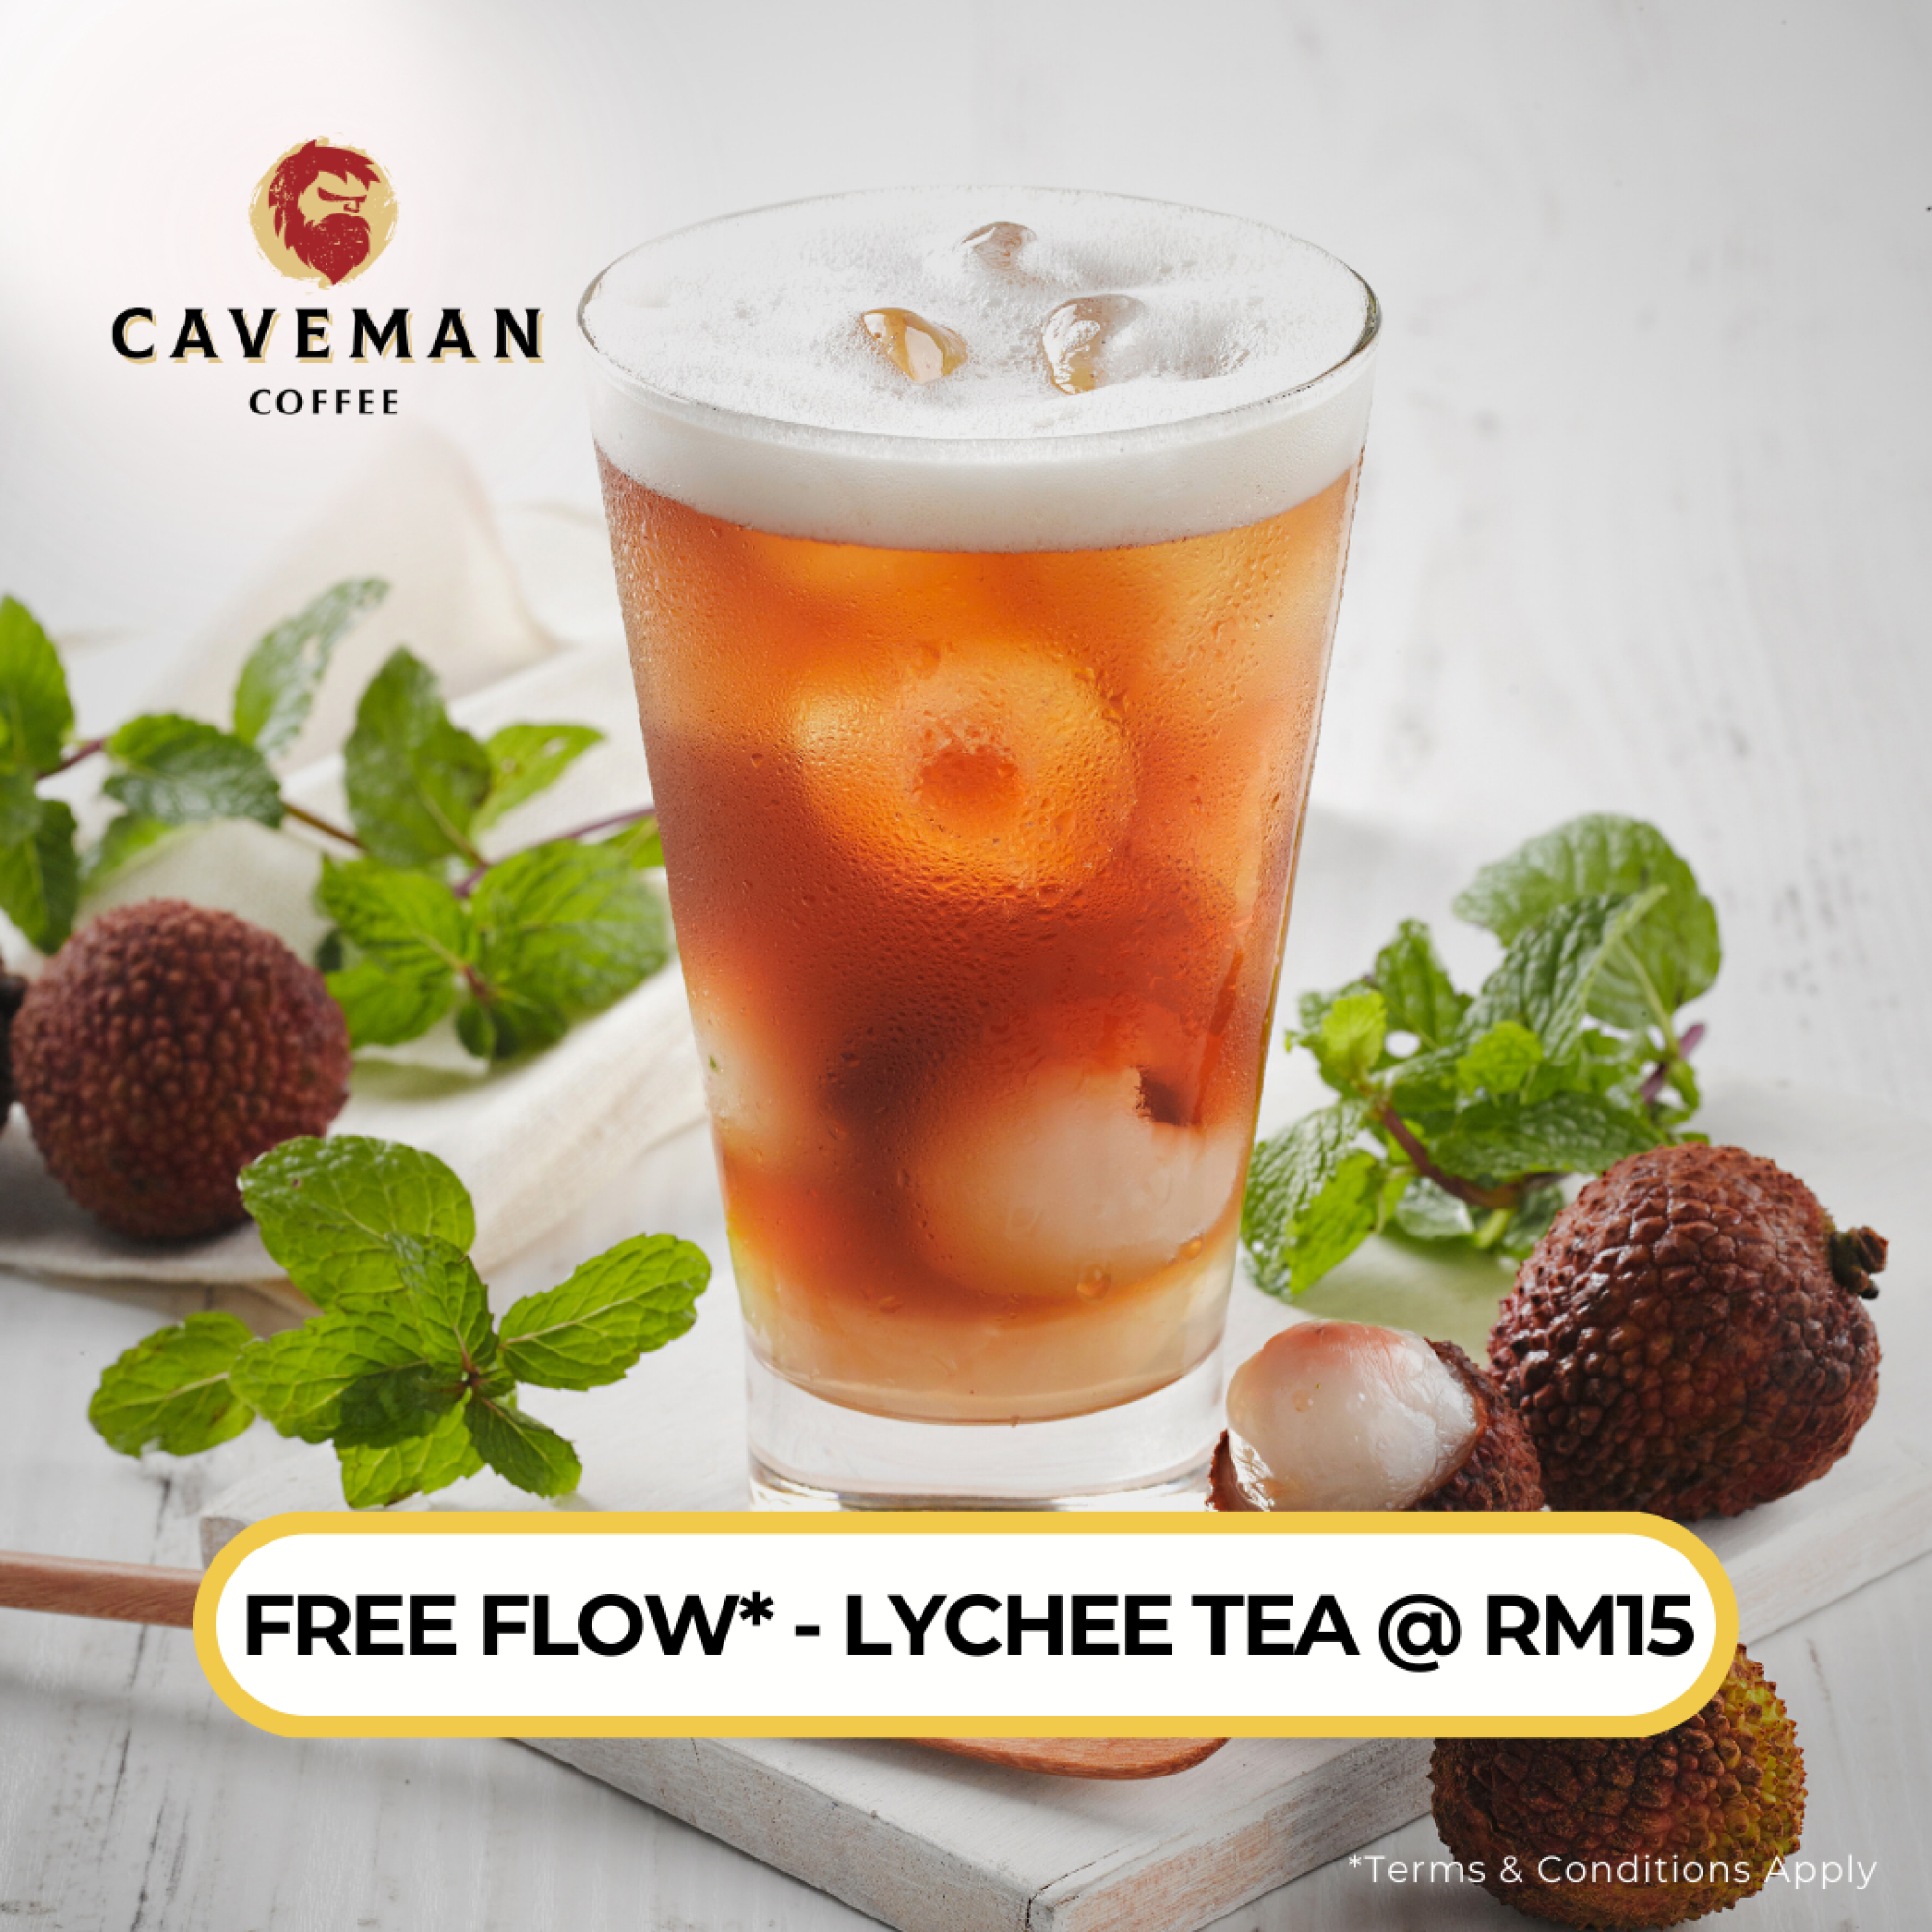 FREE FLOW* - LYCHEE TEA